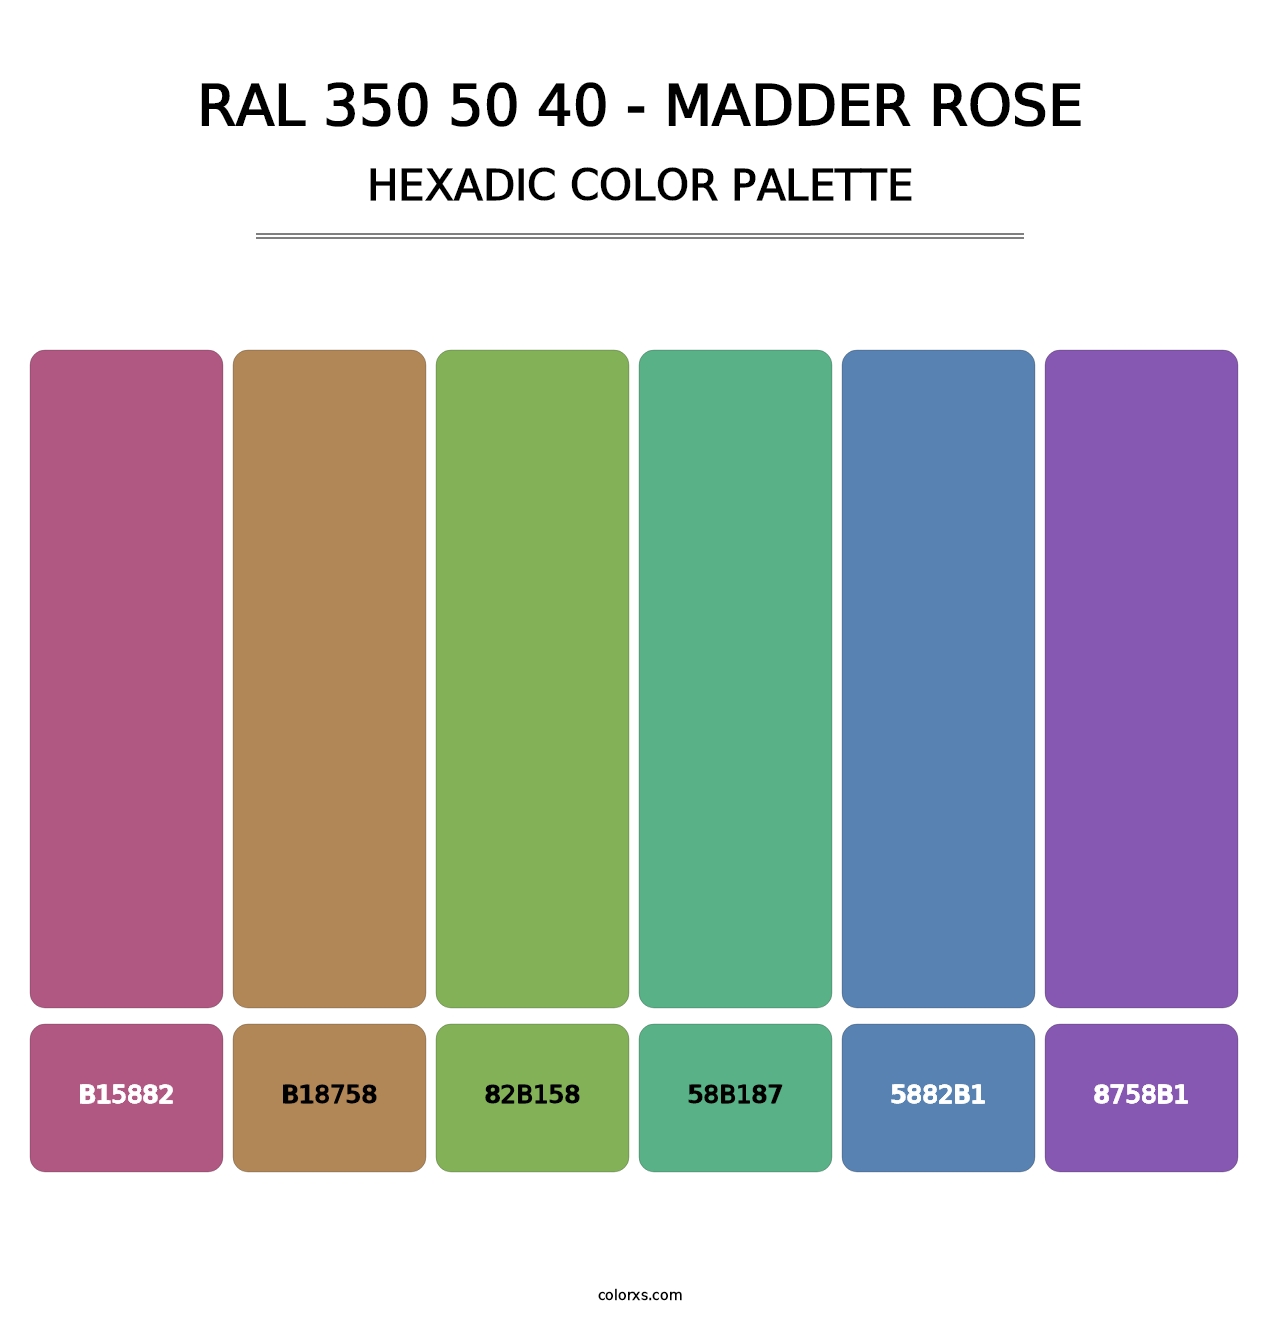 RAL 350 50 40 - Madder Rose - Hexadic Color Palette